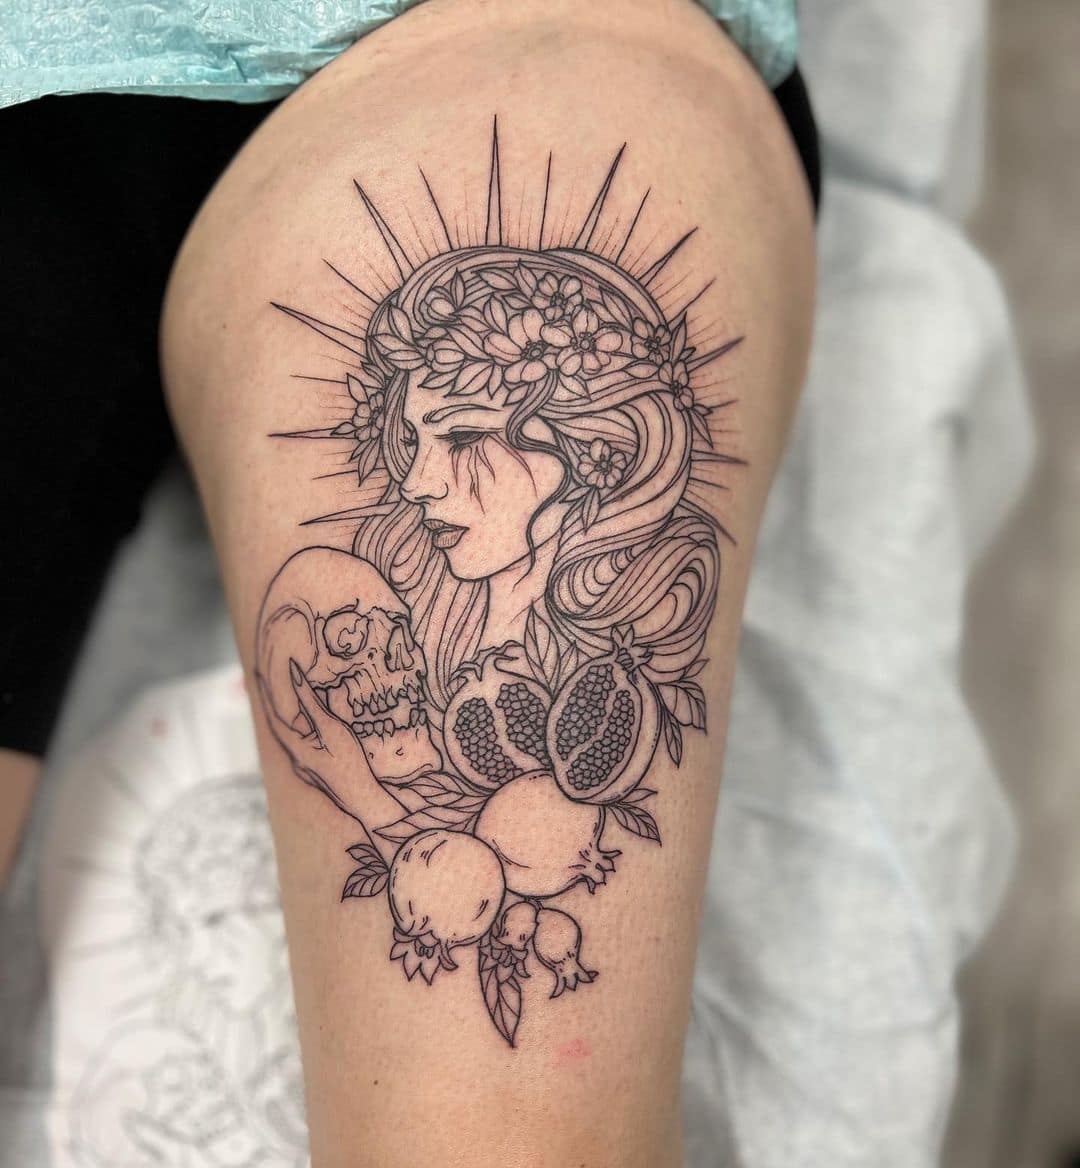 Scorpio Goddess Tattoo - Mystical and Powerful